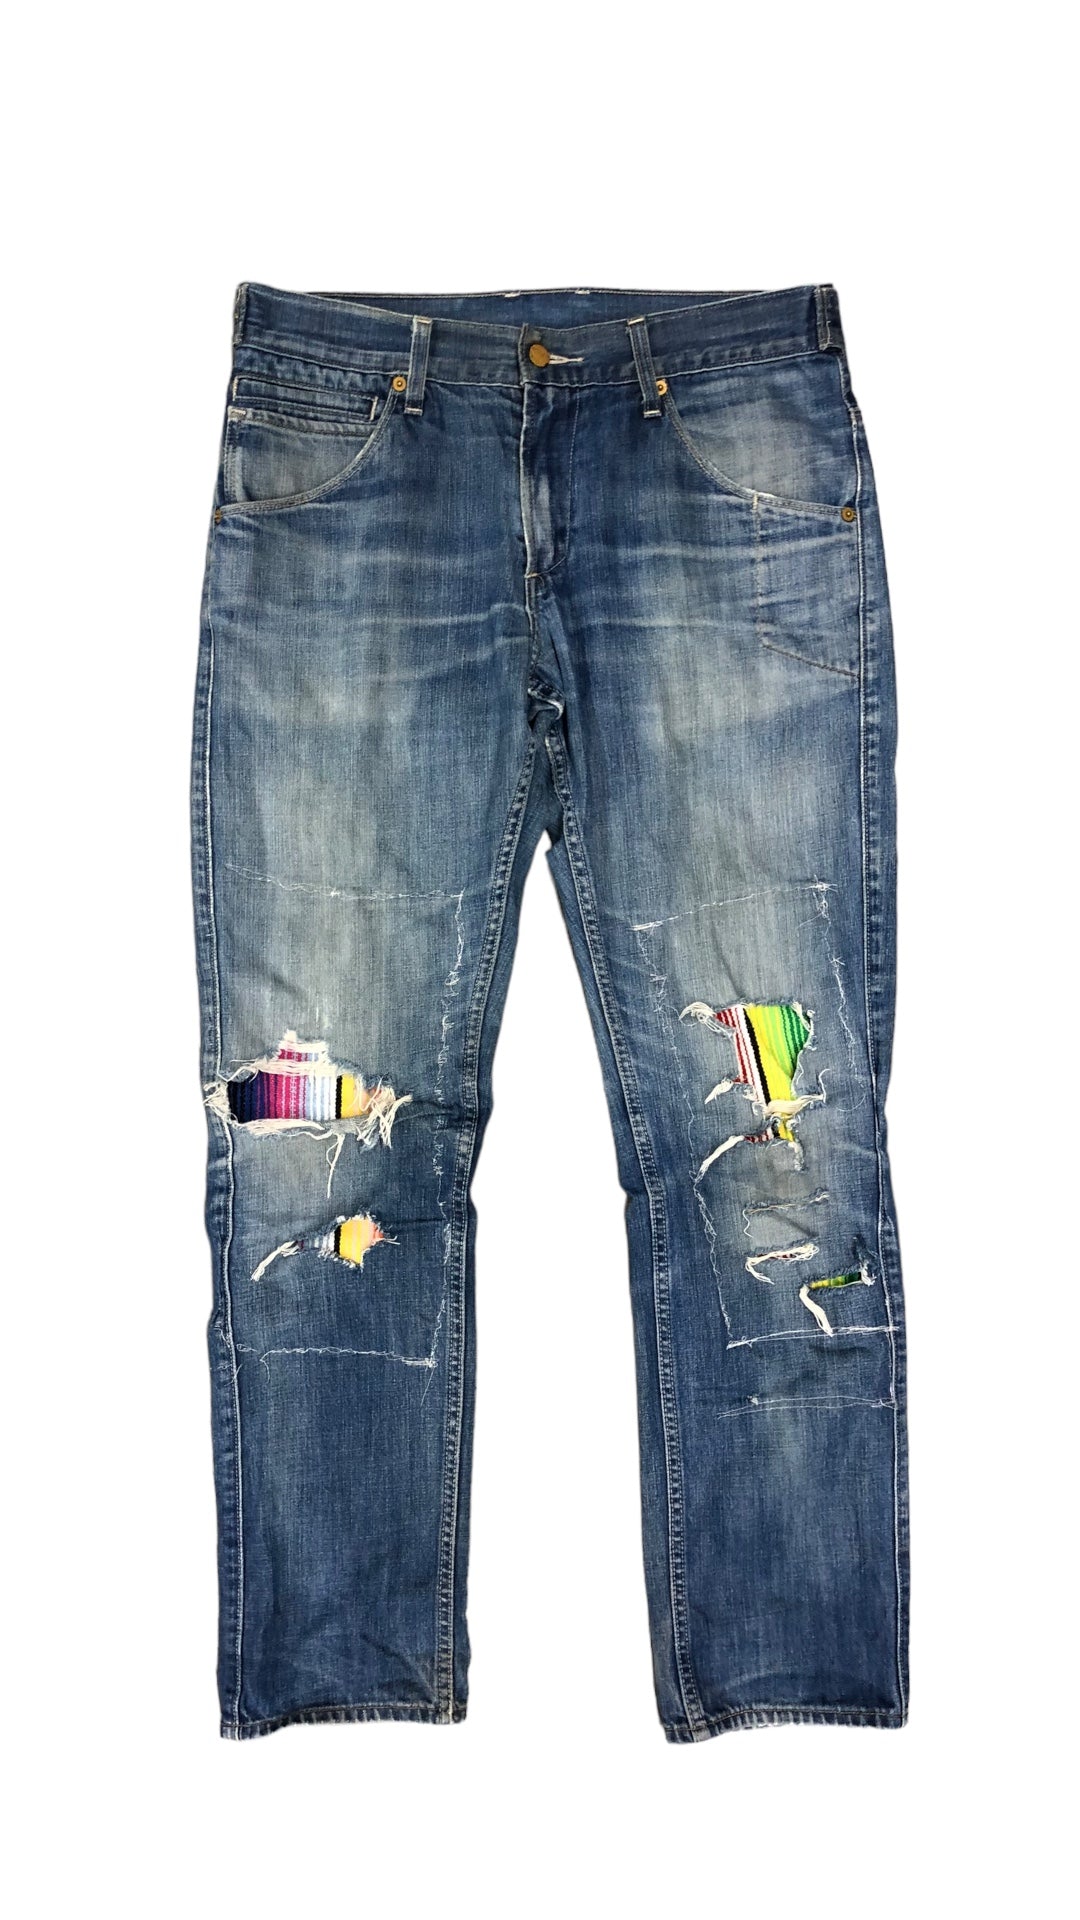 VTG Levi's 511 Reworked Stitched Blue Denim Jeans Sz 33x30